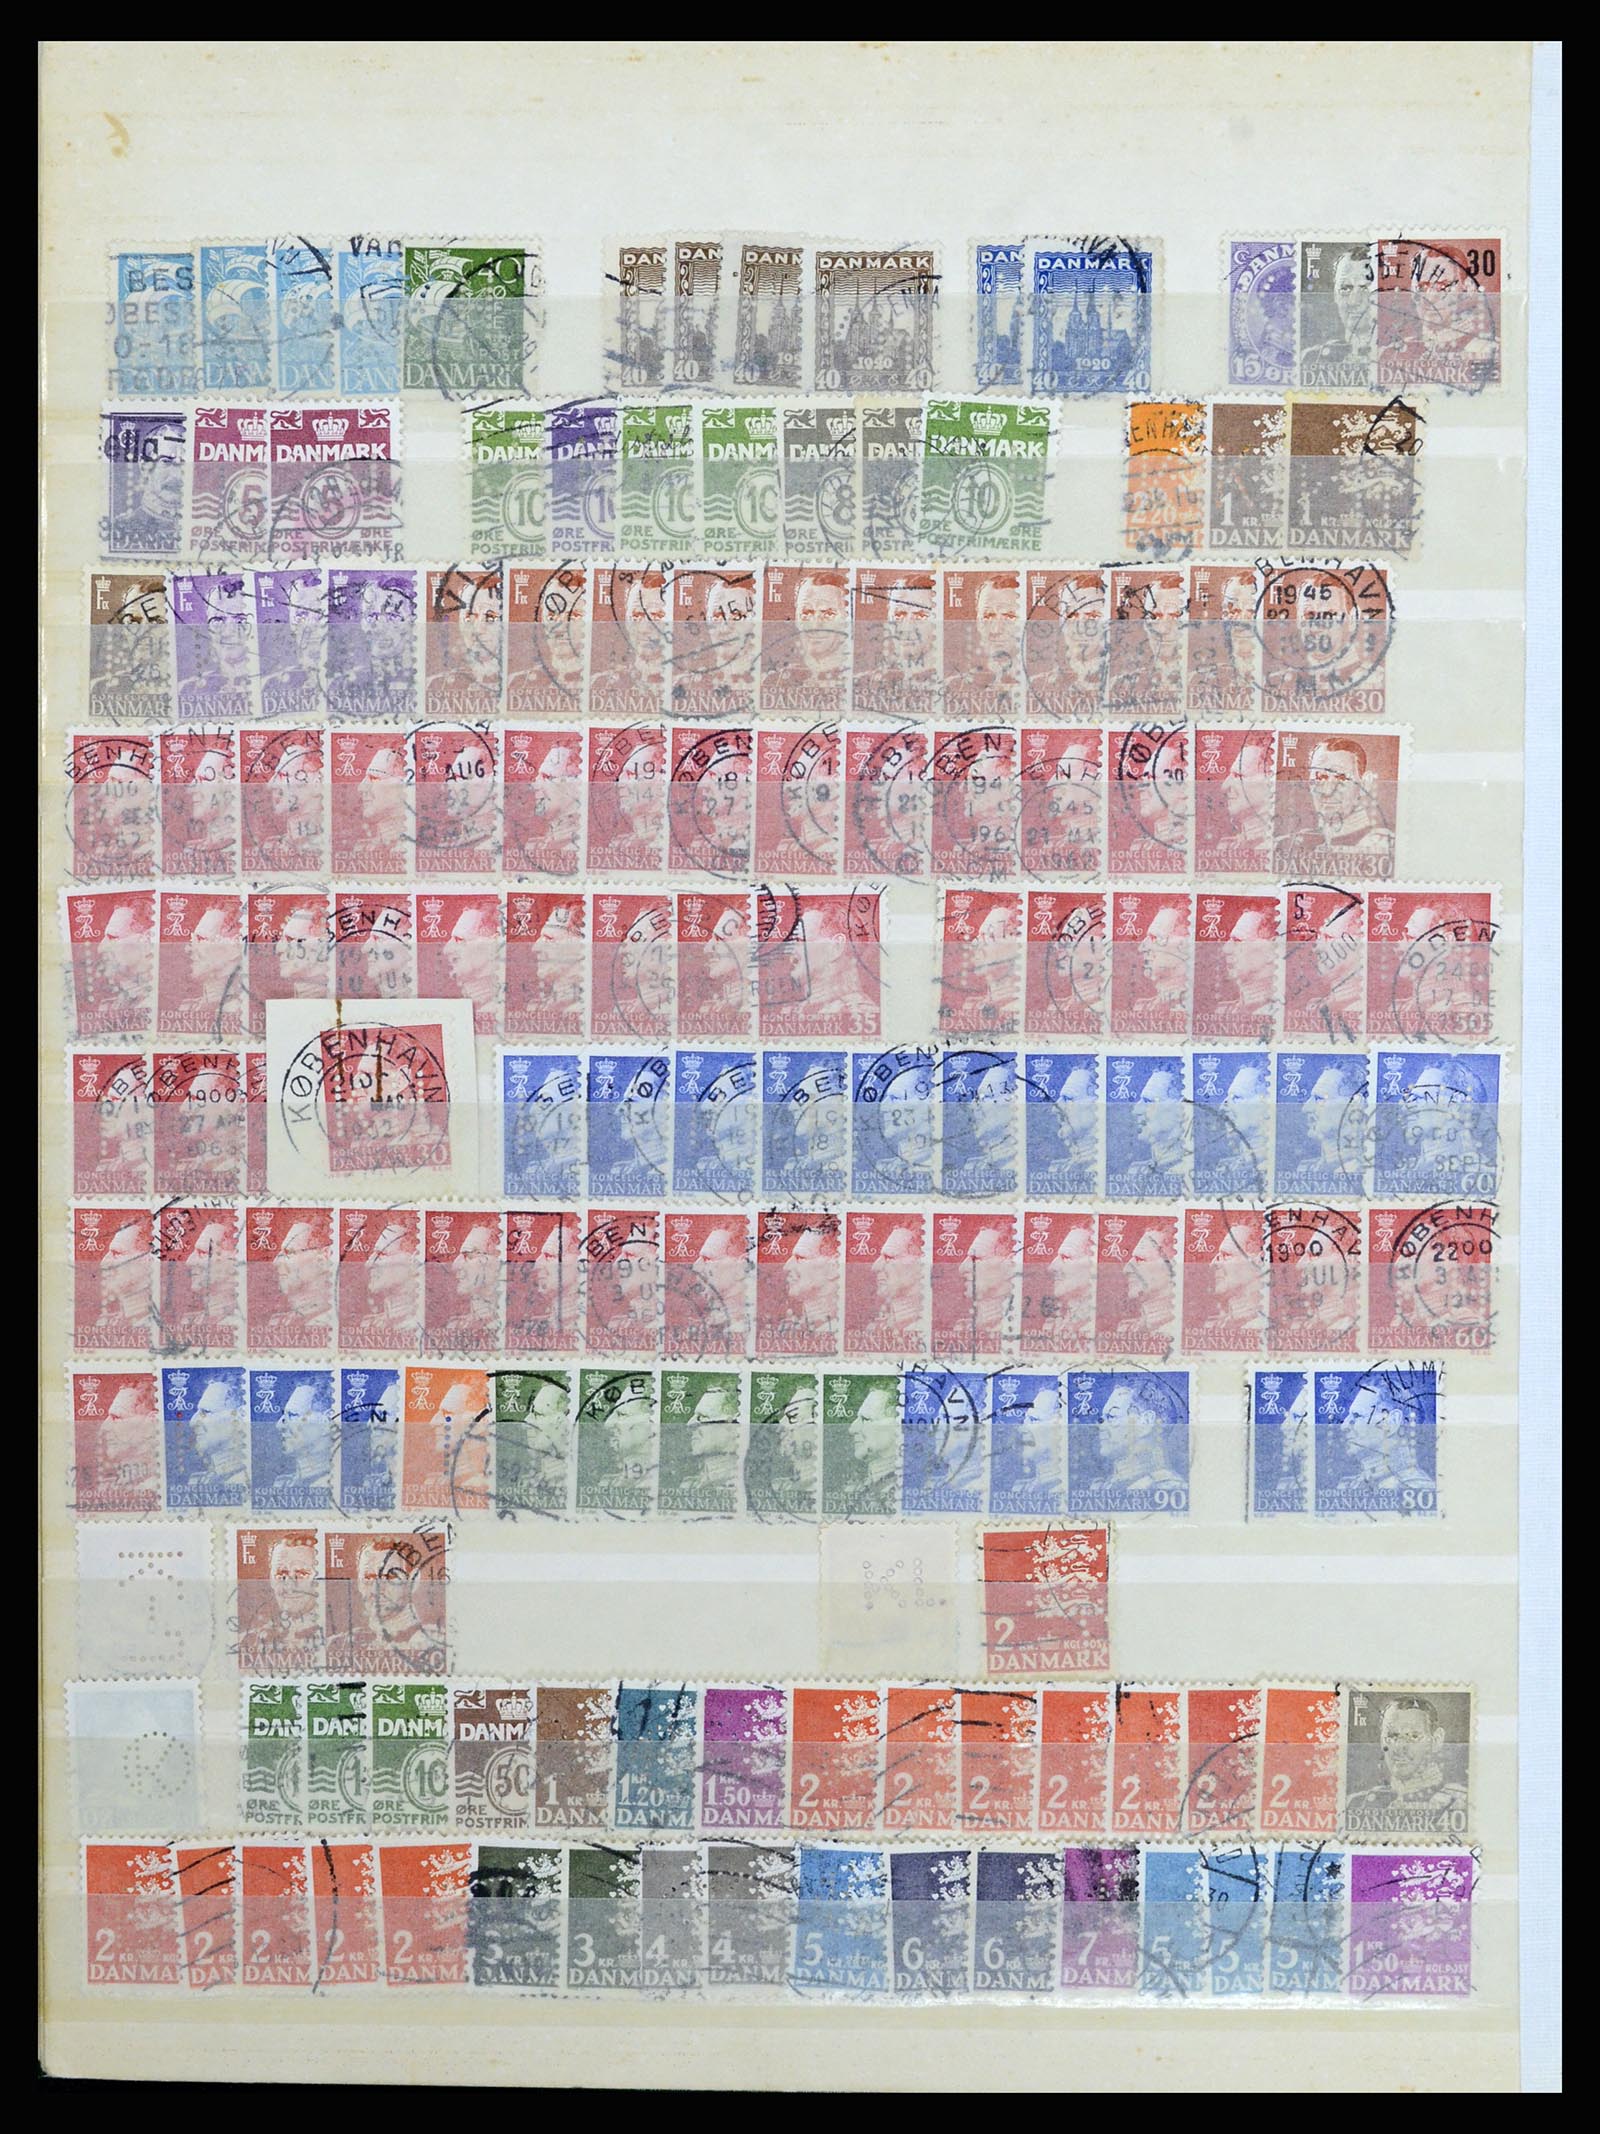 37056 080 - Stamp collection 37056 Denmark perfins.